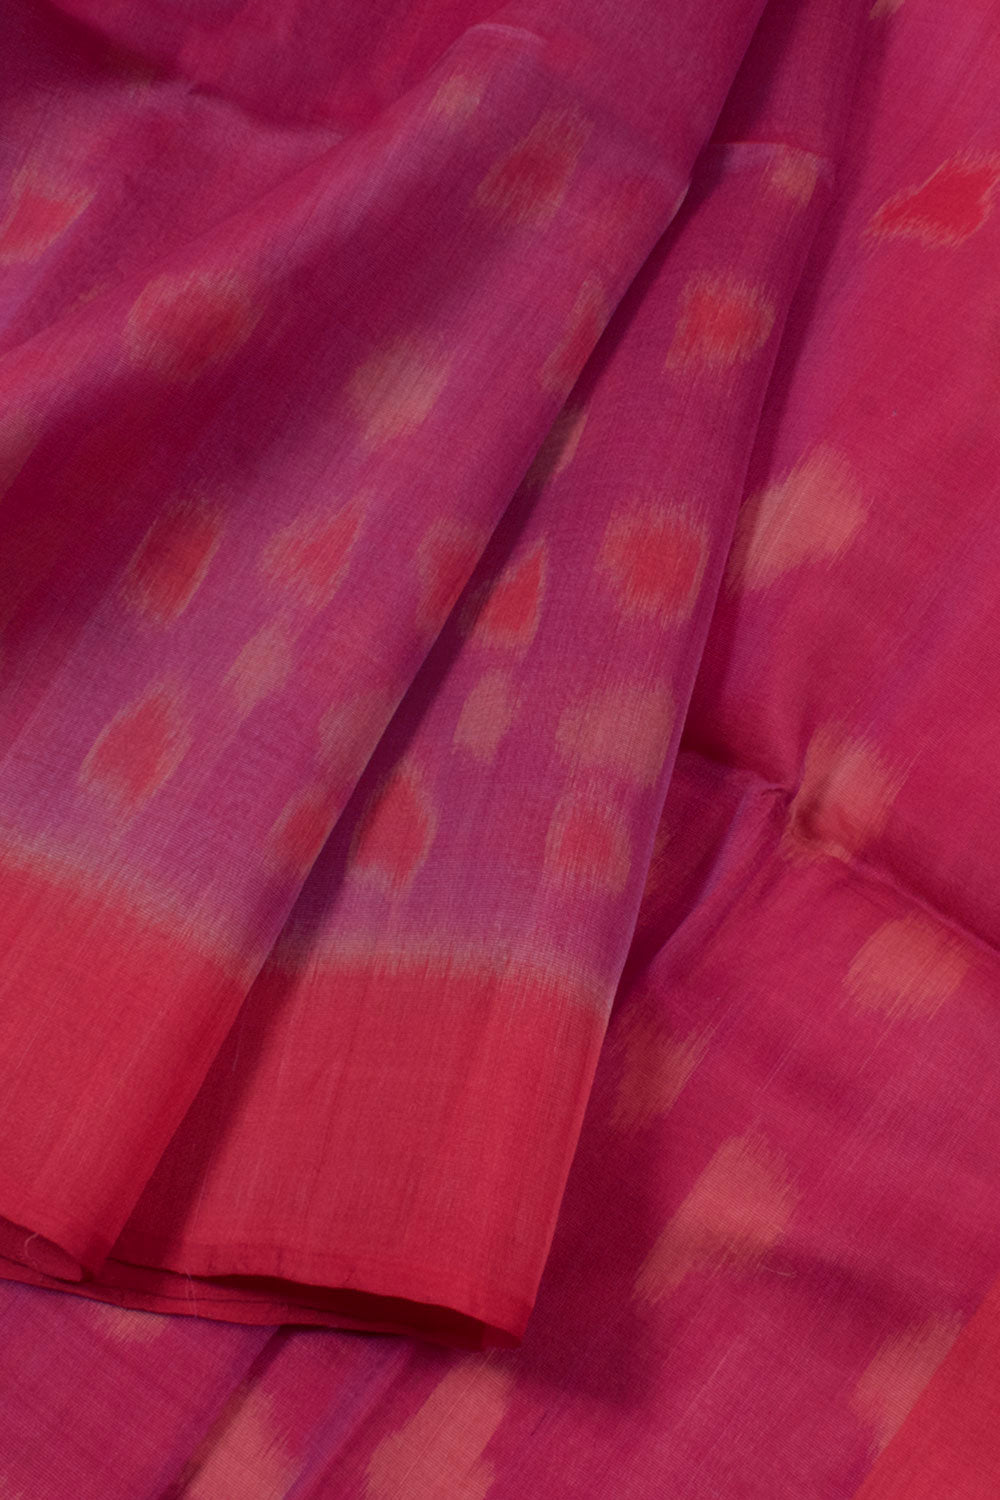 Handwoven Odisha Ikat Mulberry Silk Saree 10058145